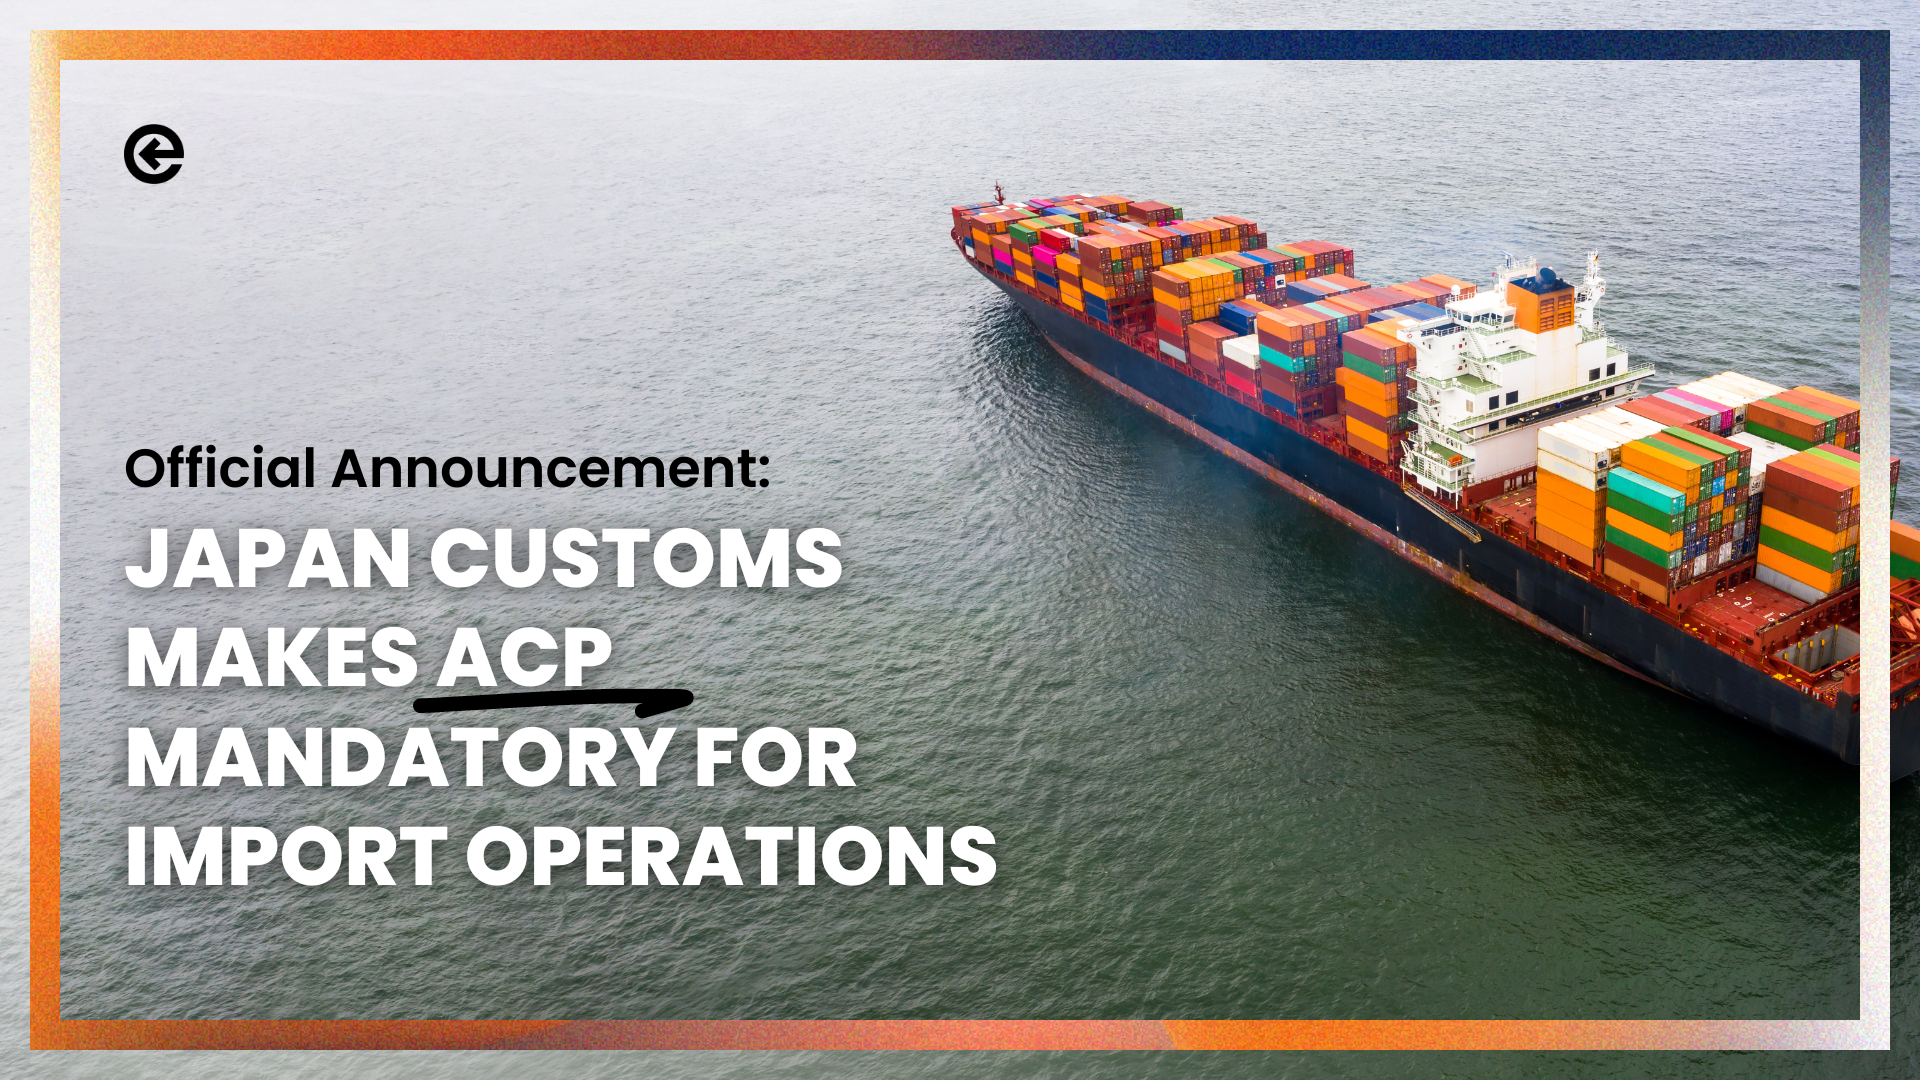 Japan Customs Makes ACP Mandatory for Import Operations